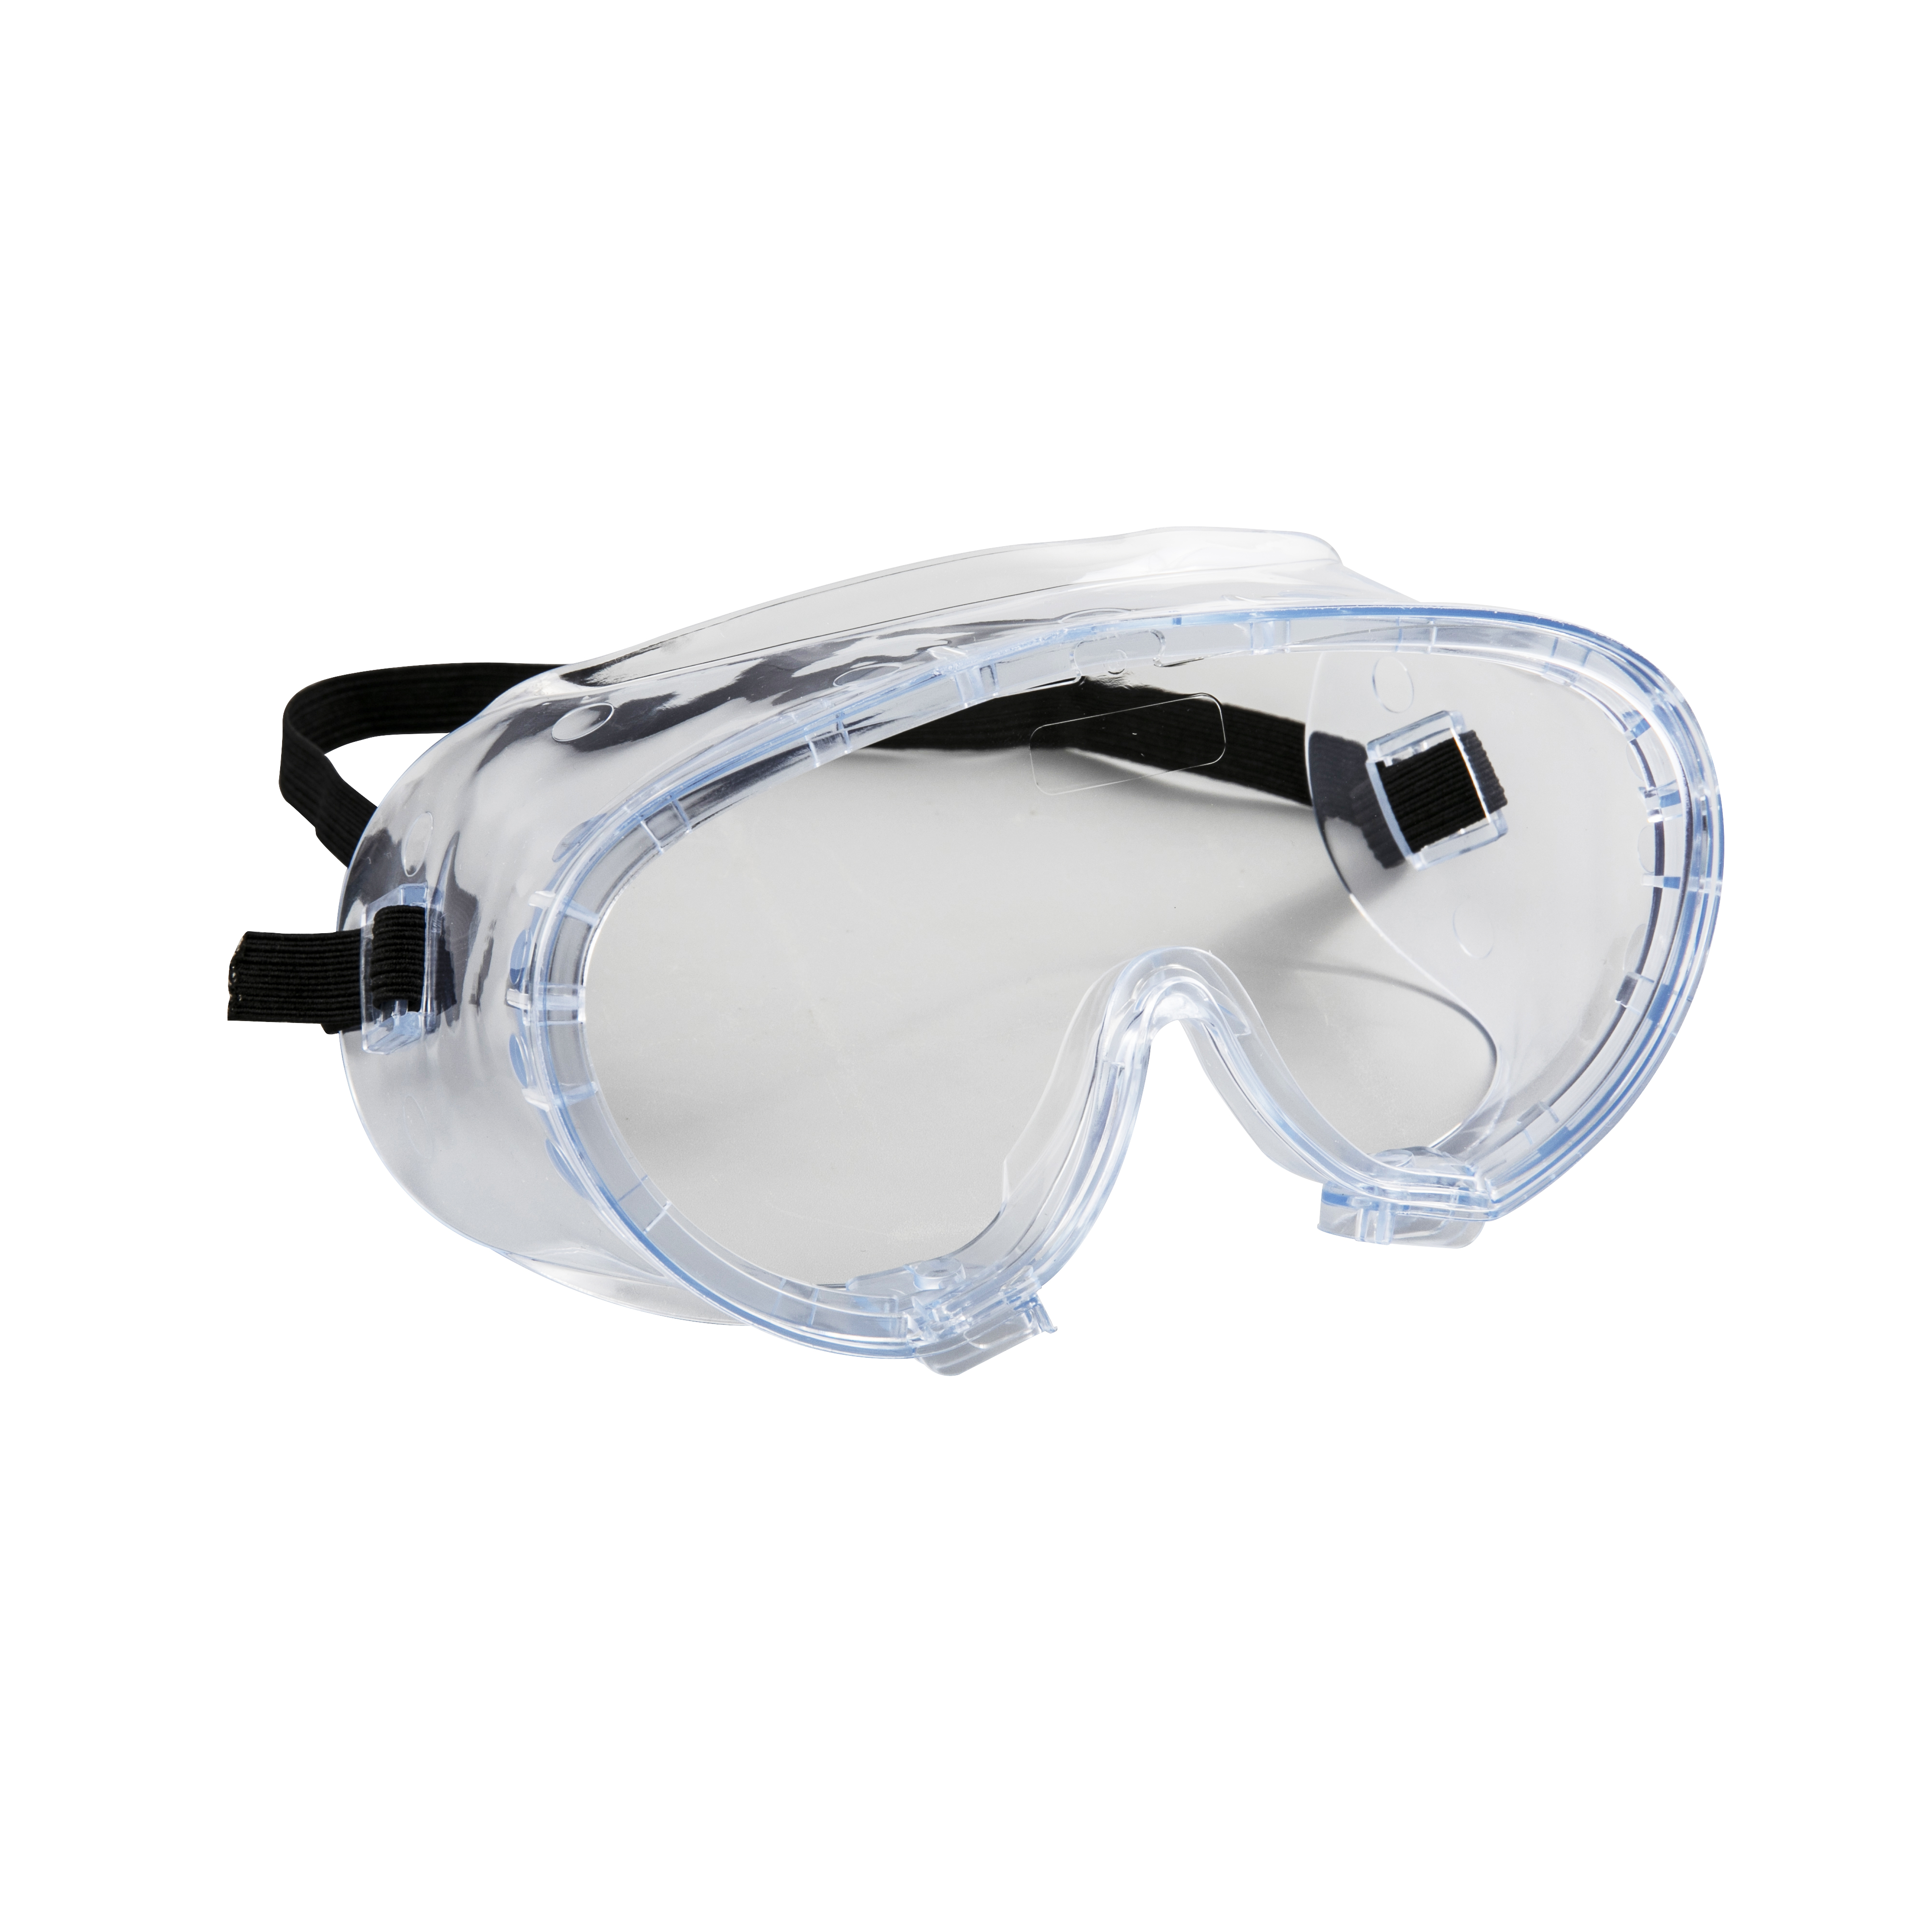 Medical Protective Eye Goggles